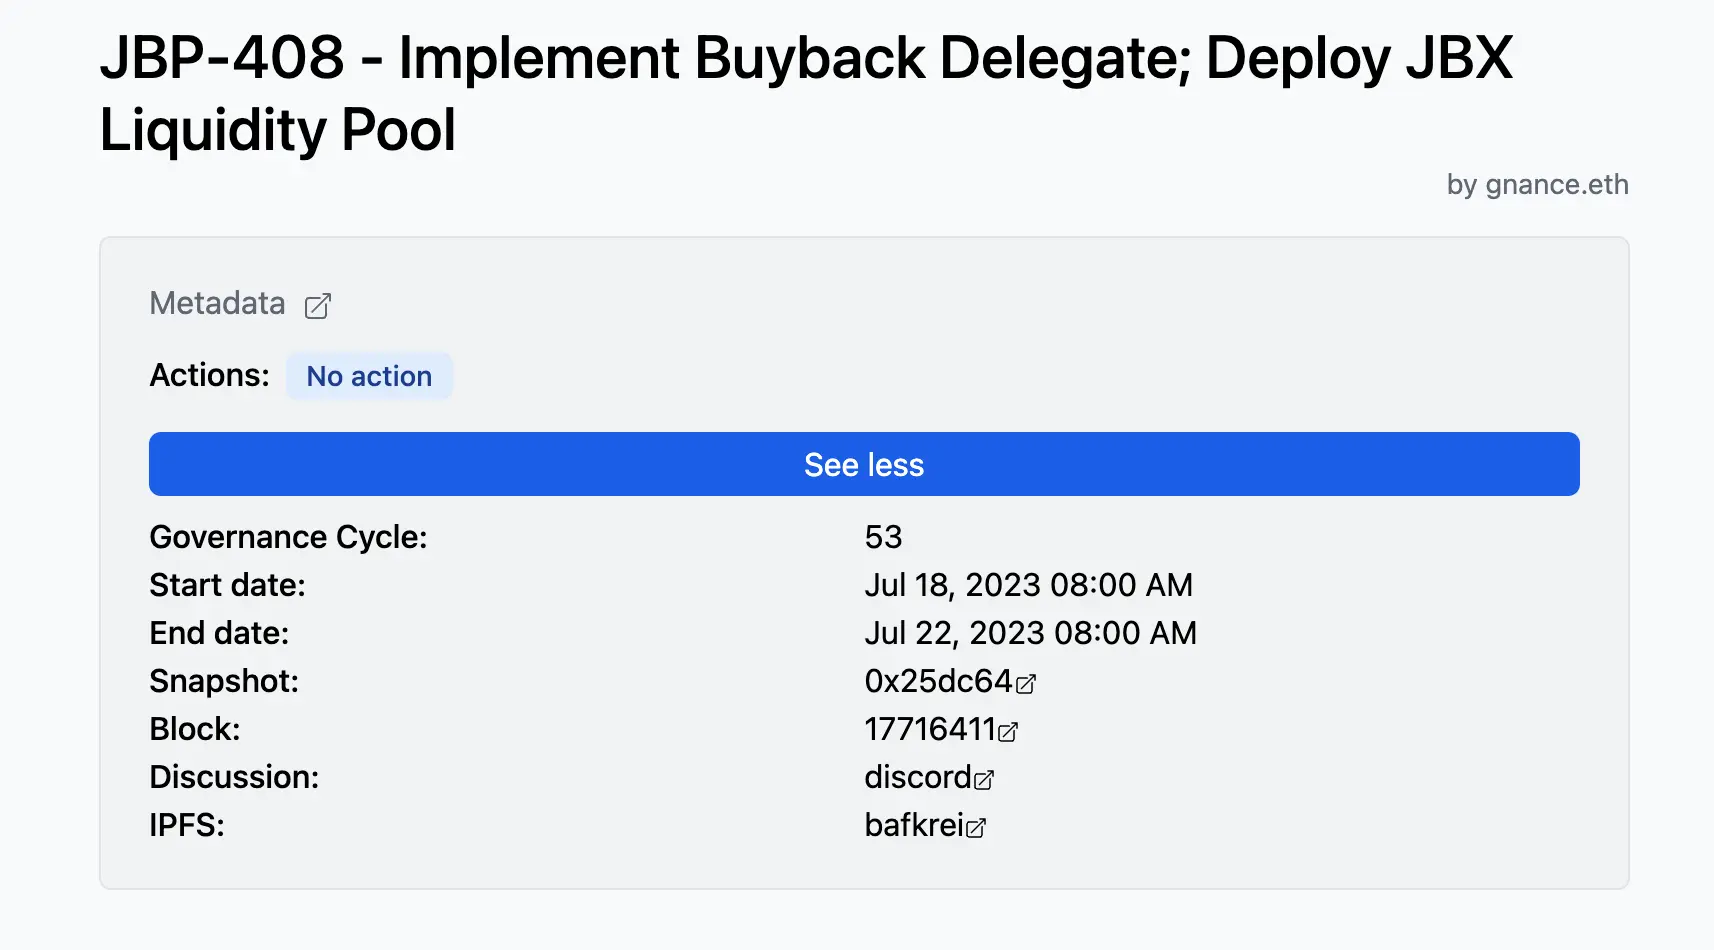 Proposal of implementing buyback delegate